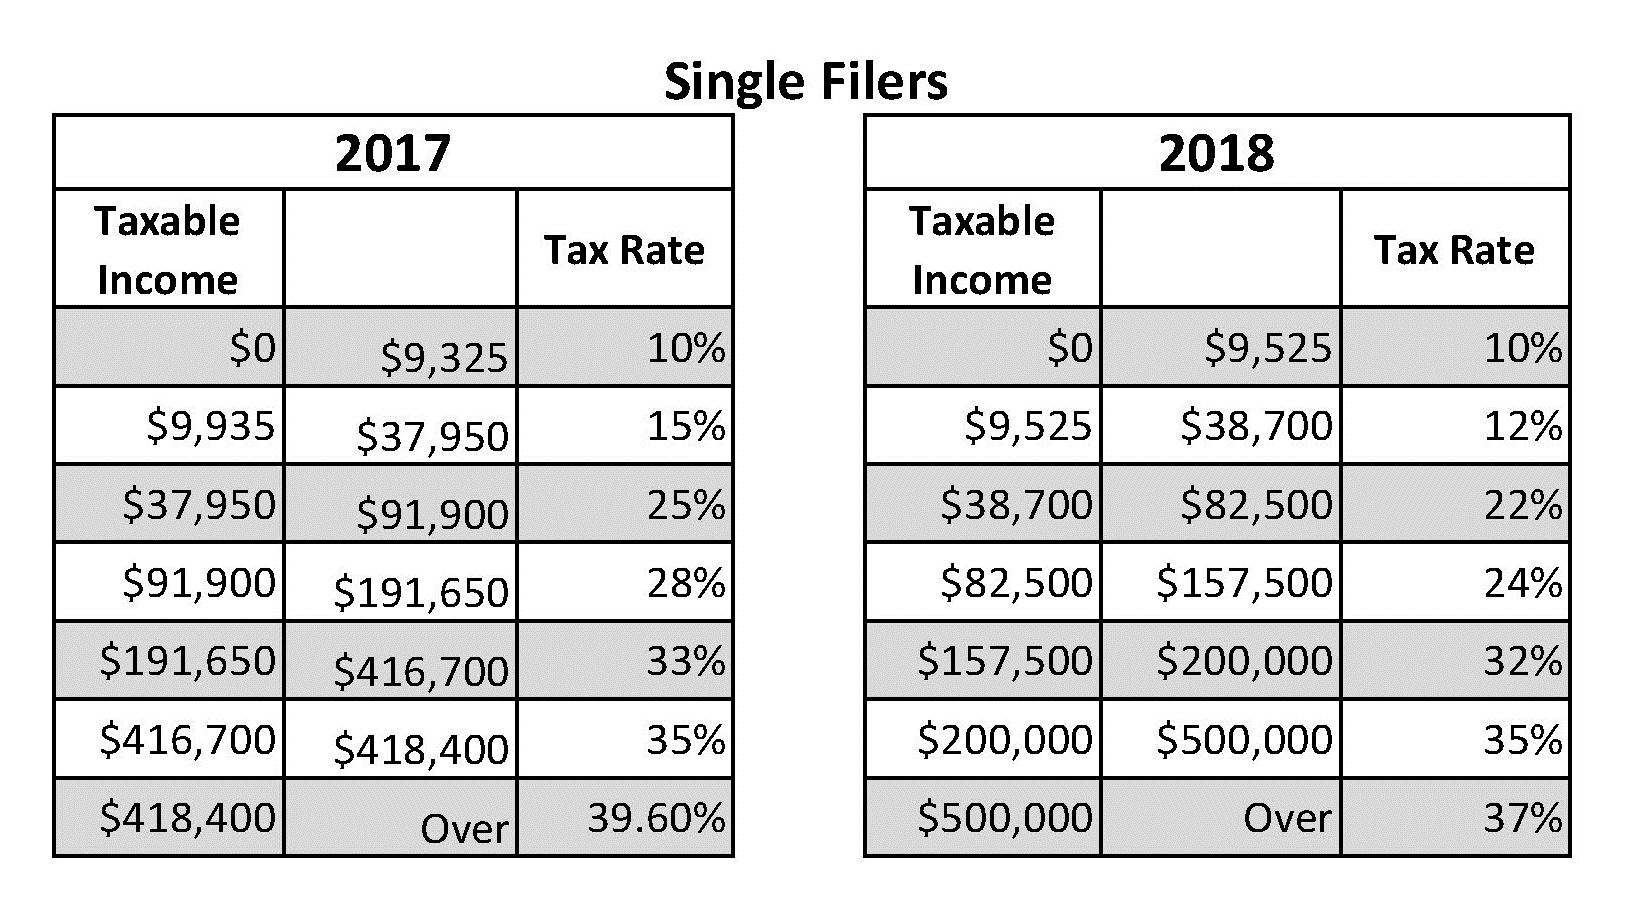 Singler Filers under 2018 tax law